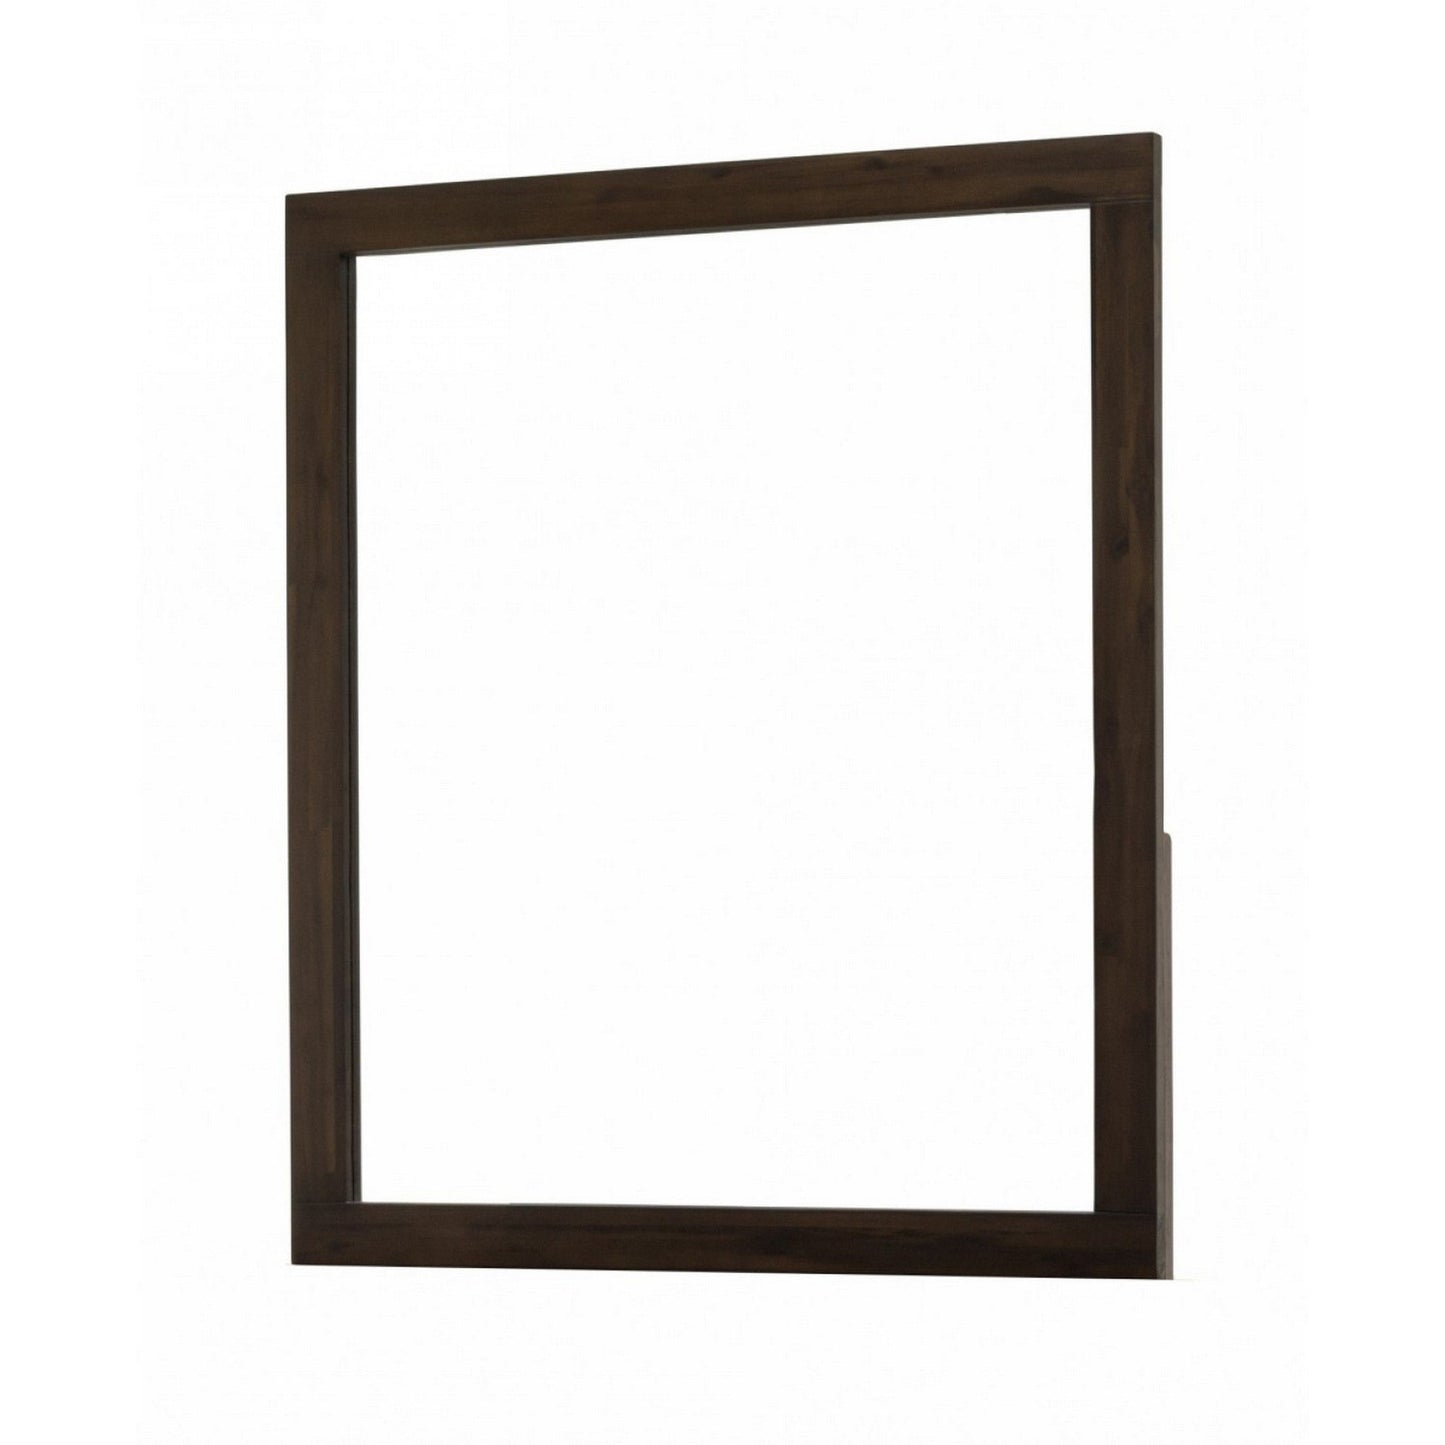 Benzara Walnut Brown Rectangular Shape Wall Mirror With Wooden Frame